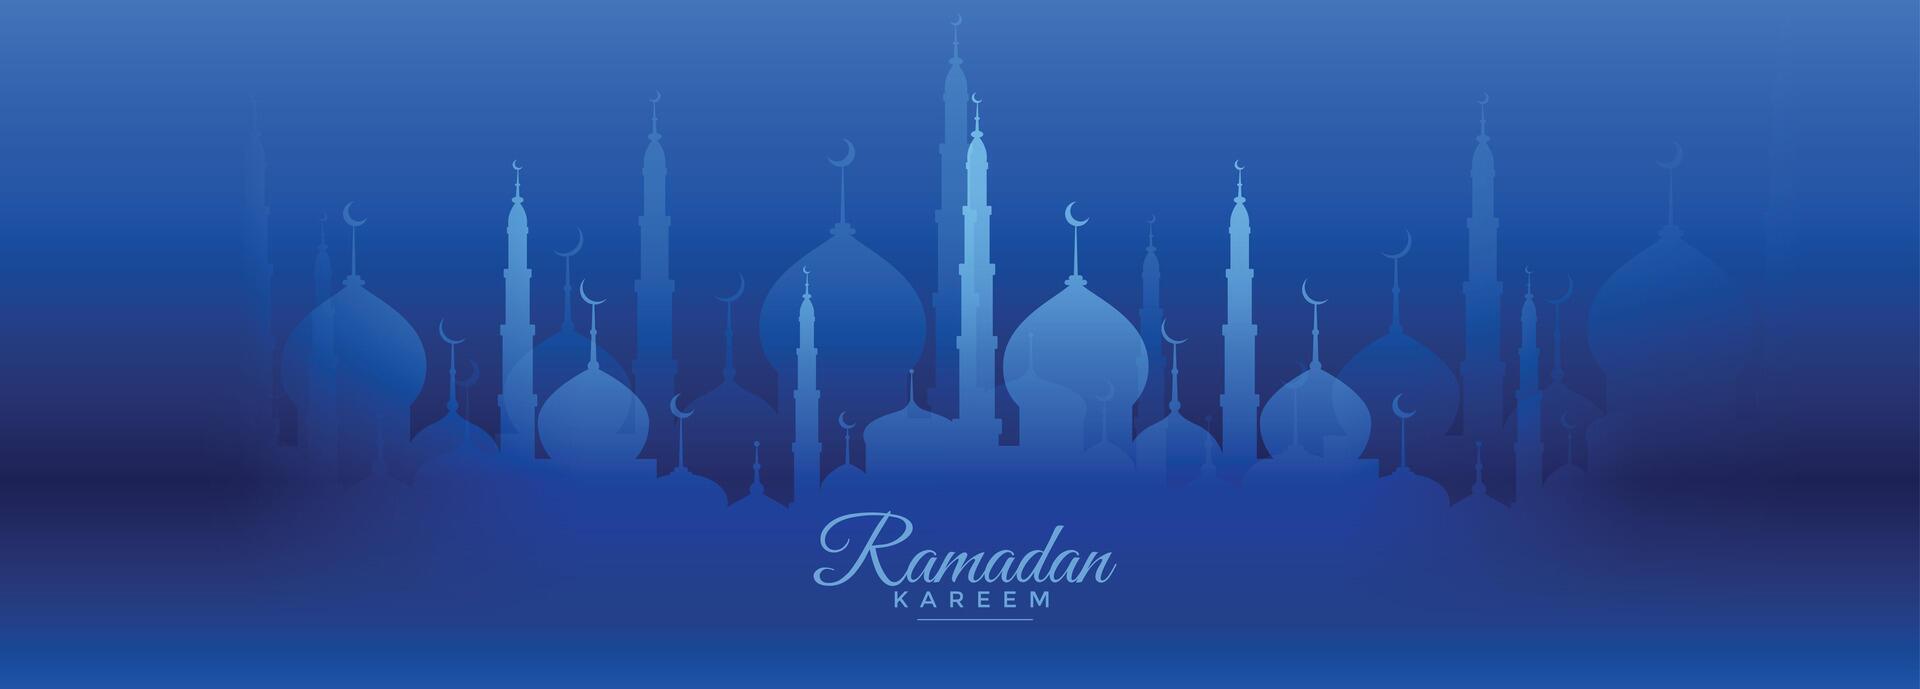 ramadan kareem blue banner with mosque design vector